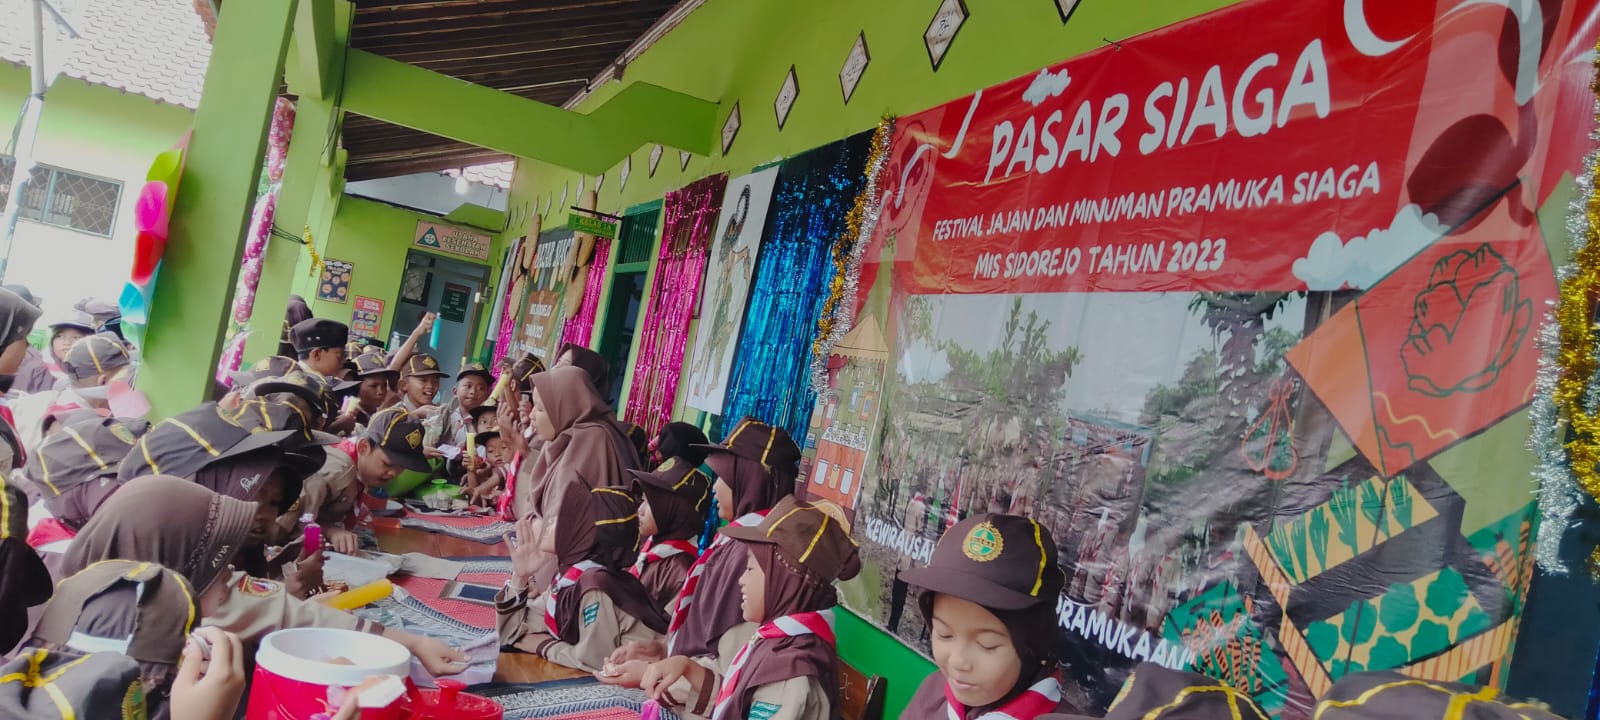 Pangkalan MIS Sidorejo Tirto Gelar Pasar Siaga dan Bazar Siaga